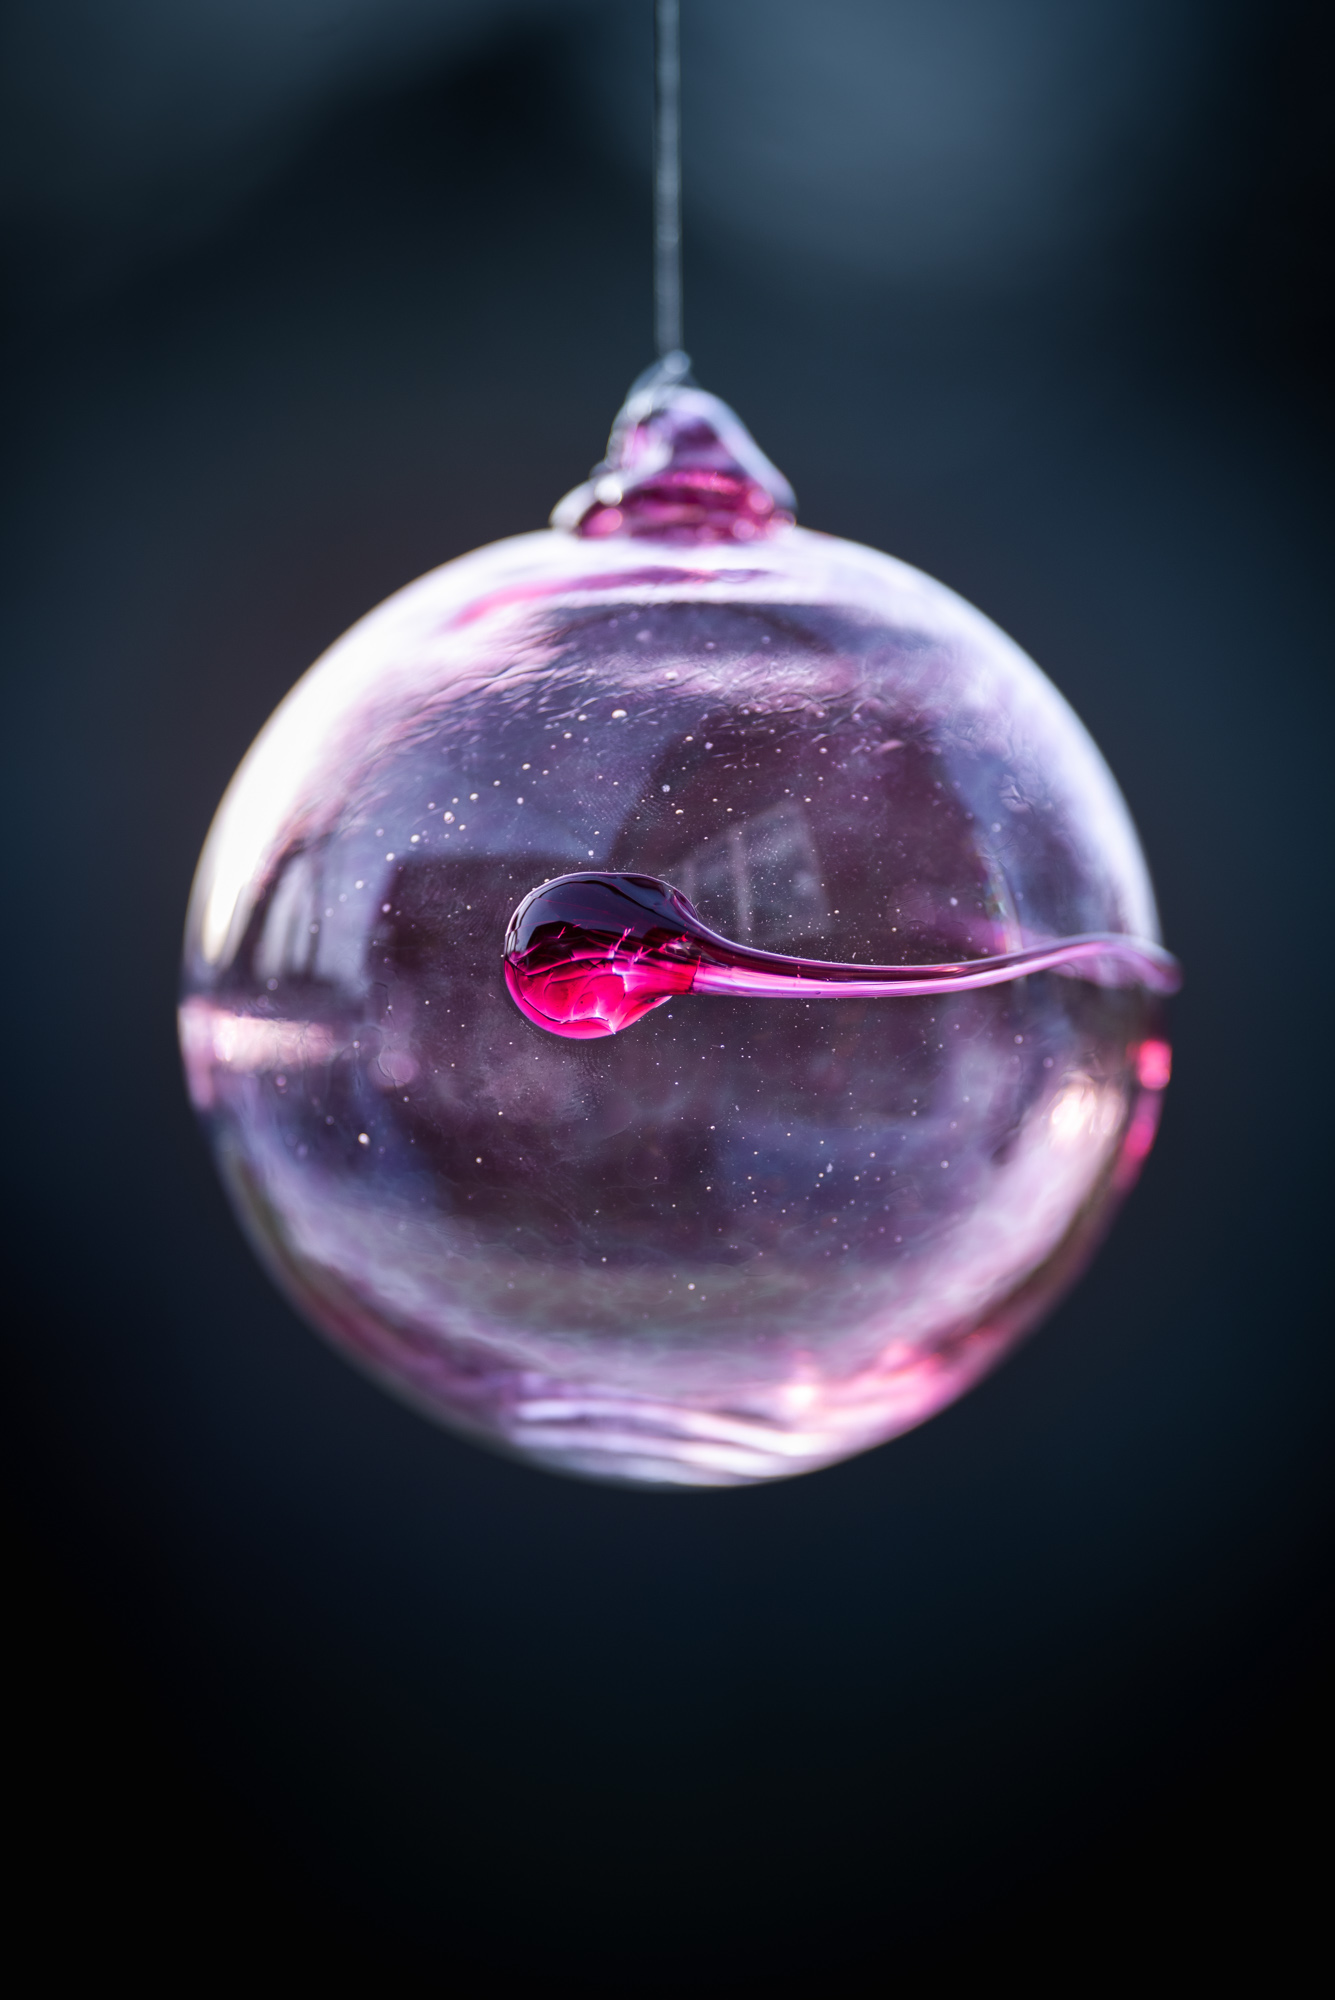 Purple Egg with Sperm